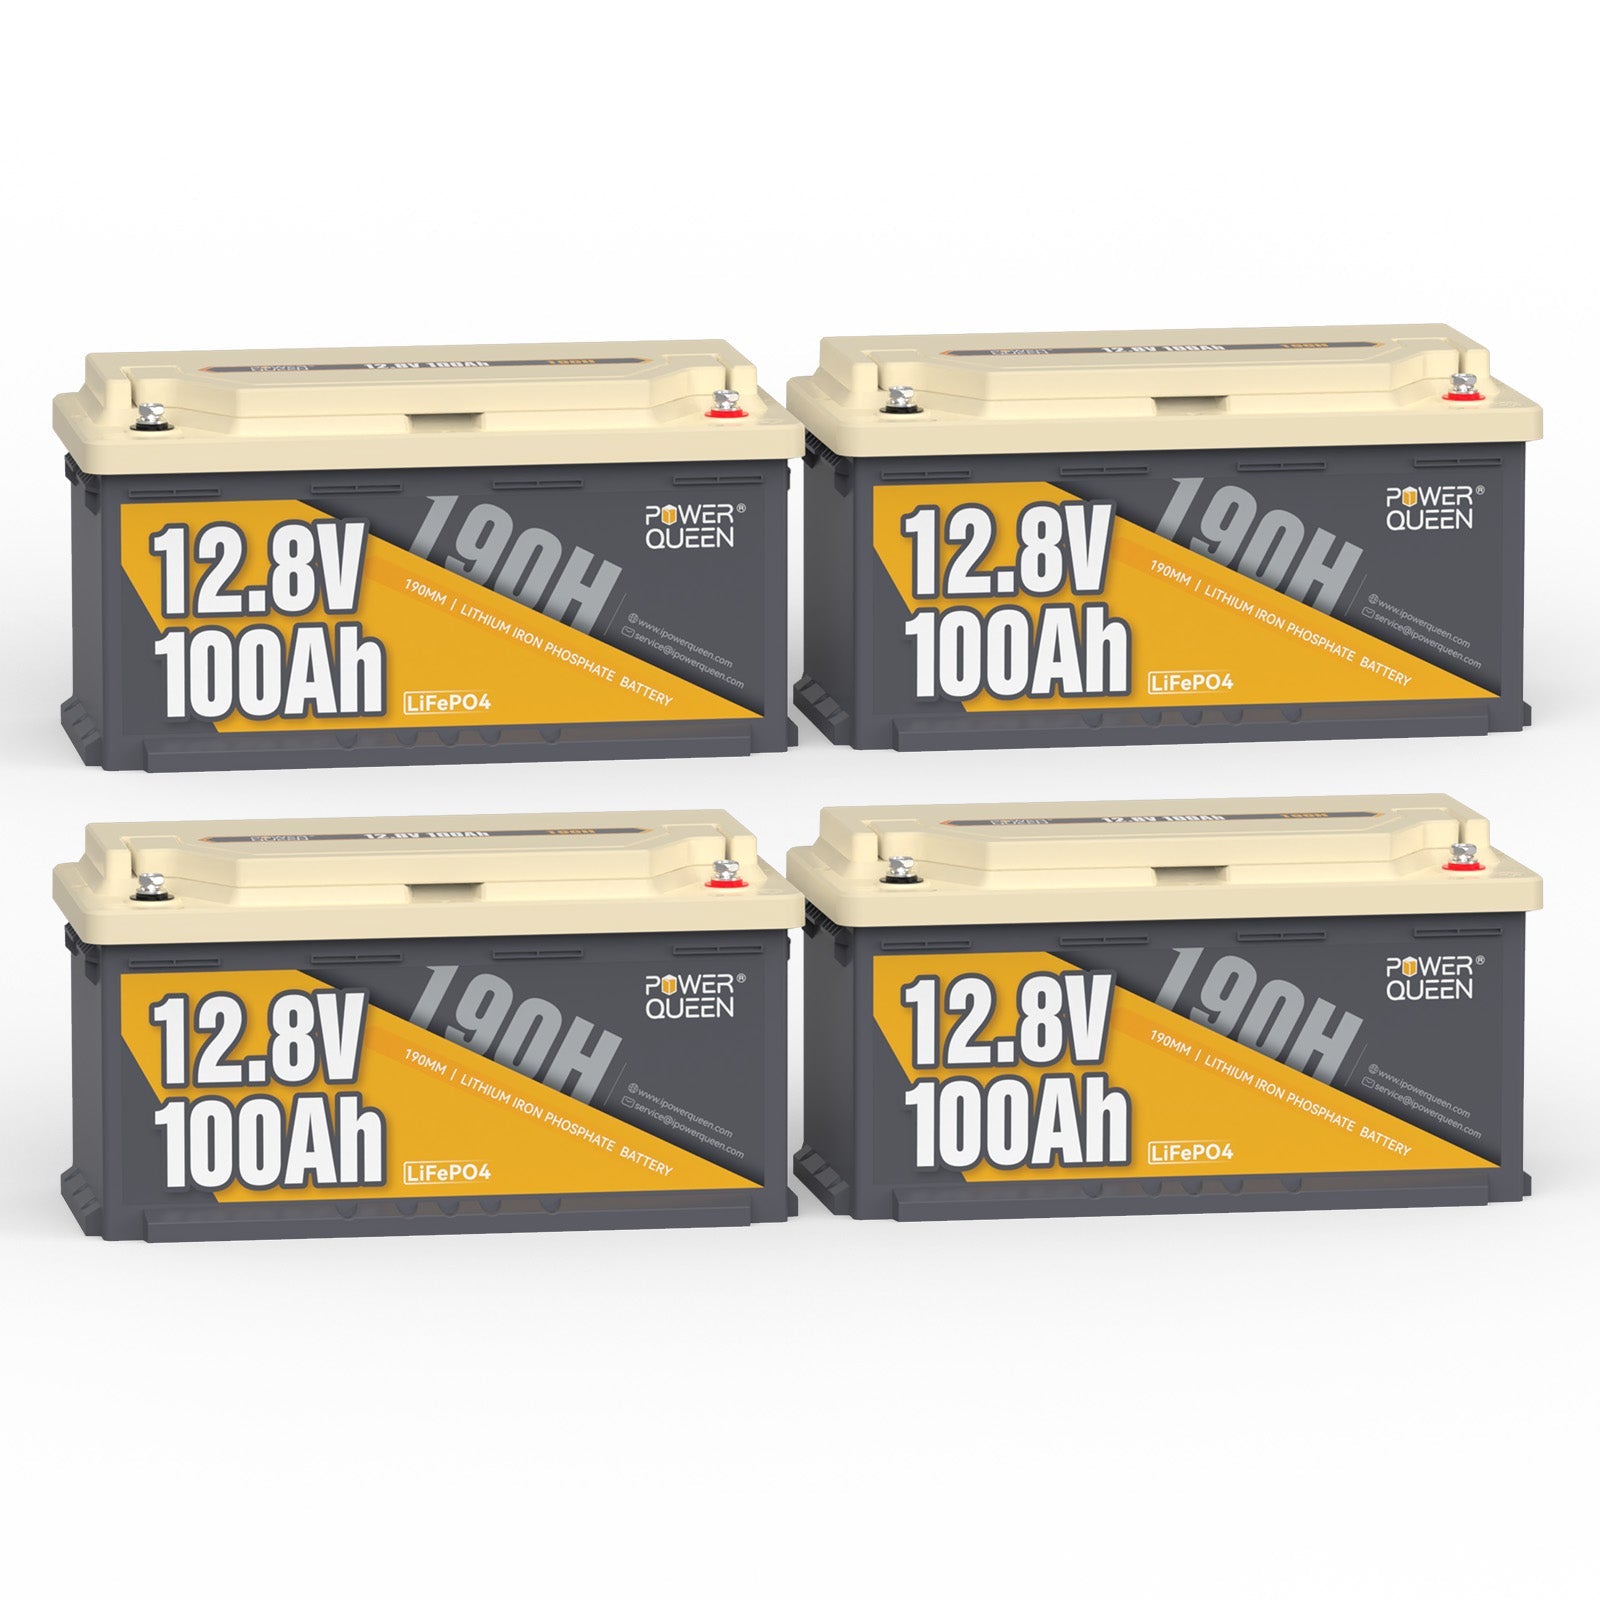 【TVA 0%】 Batterie Power Queen 12,8V 100Ah 190H LiFePO4 pour camping-car, système solaire